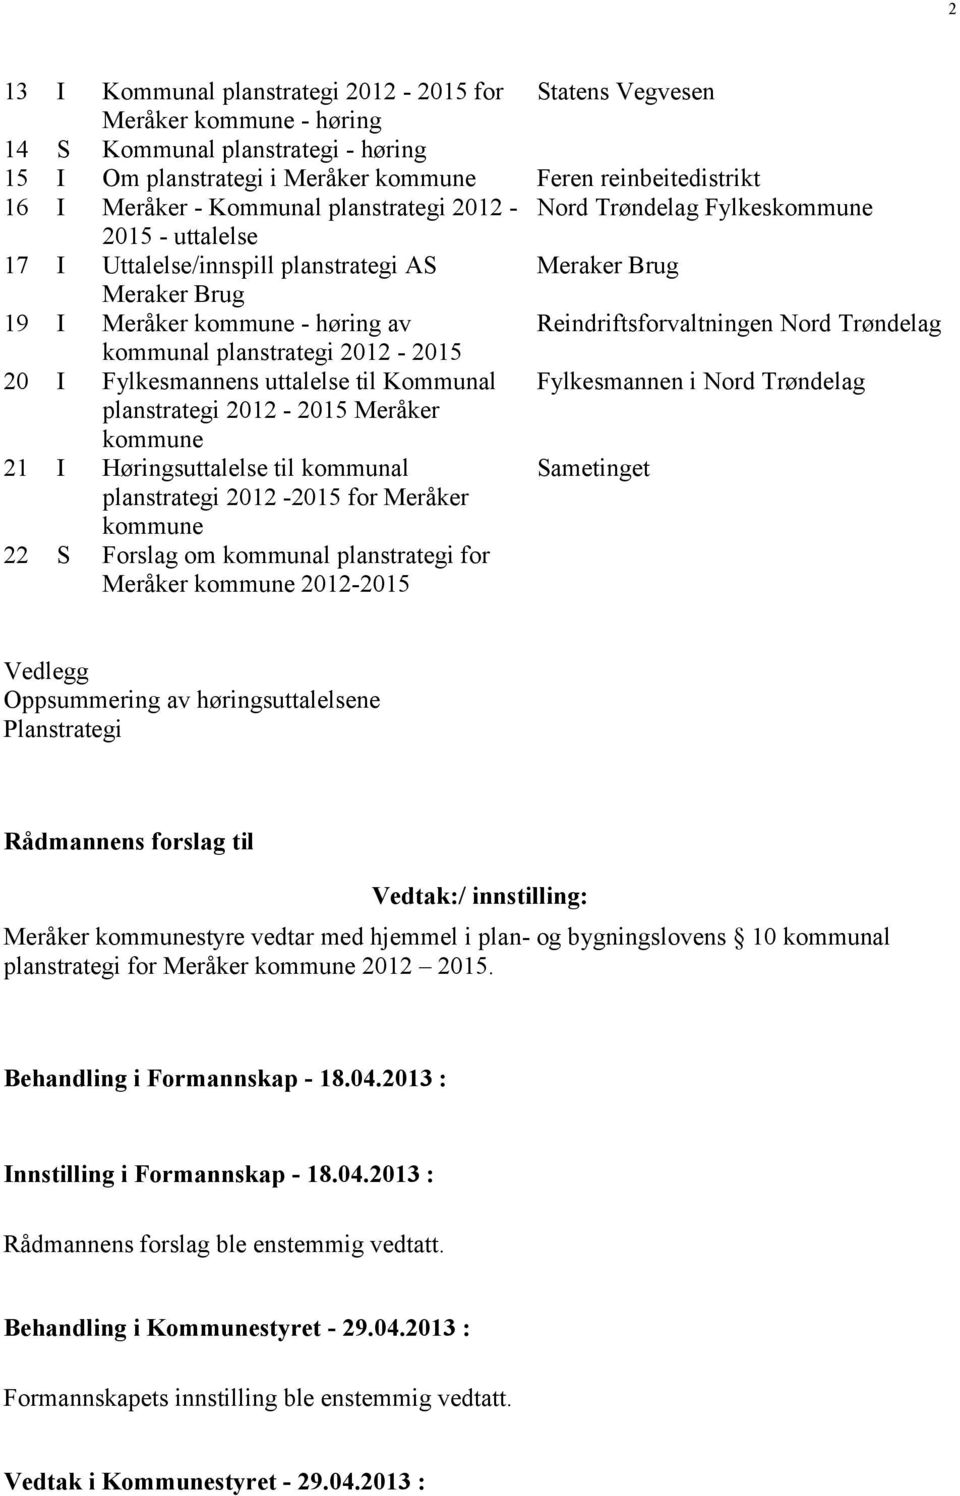 Nord Trøndelag kommunal planstrategi 2012-2015 20 I Fylkesmannens uttalelse til Kommunal Fylkesmannen i Nord Trøndelag planstrategi 2012-2015 Meråker kommune 21 I Høringsuttalelse til kommunal